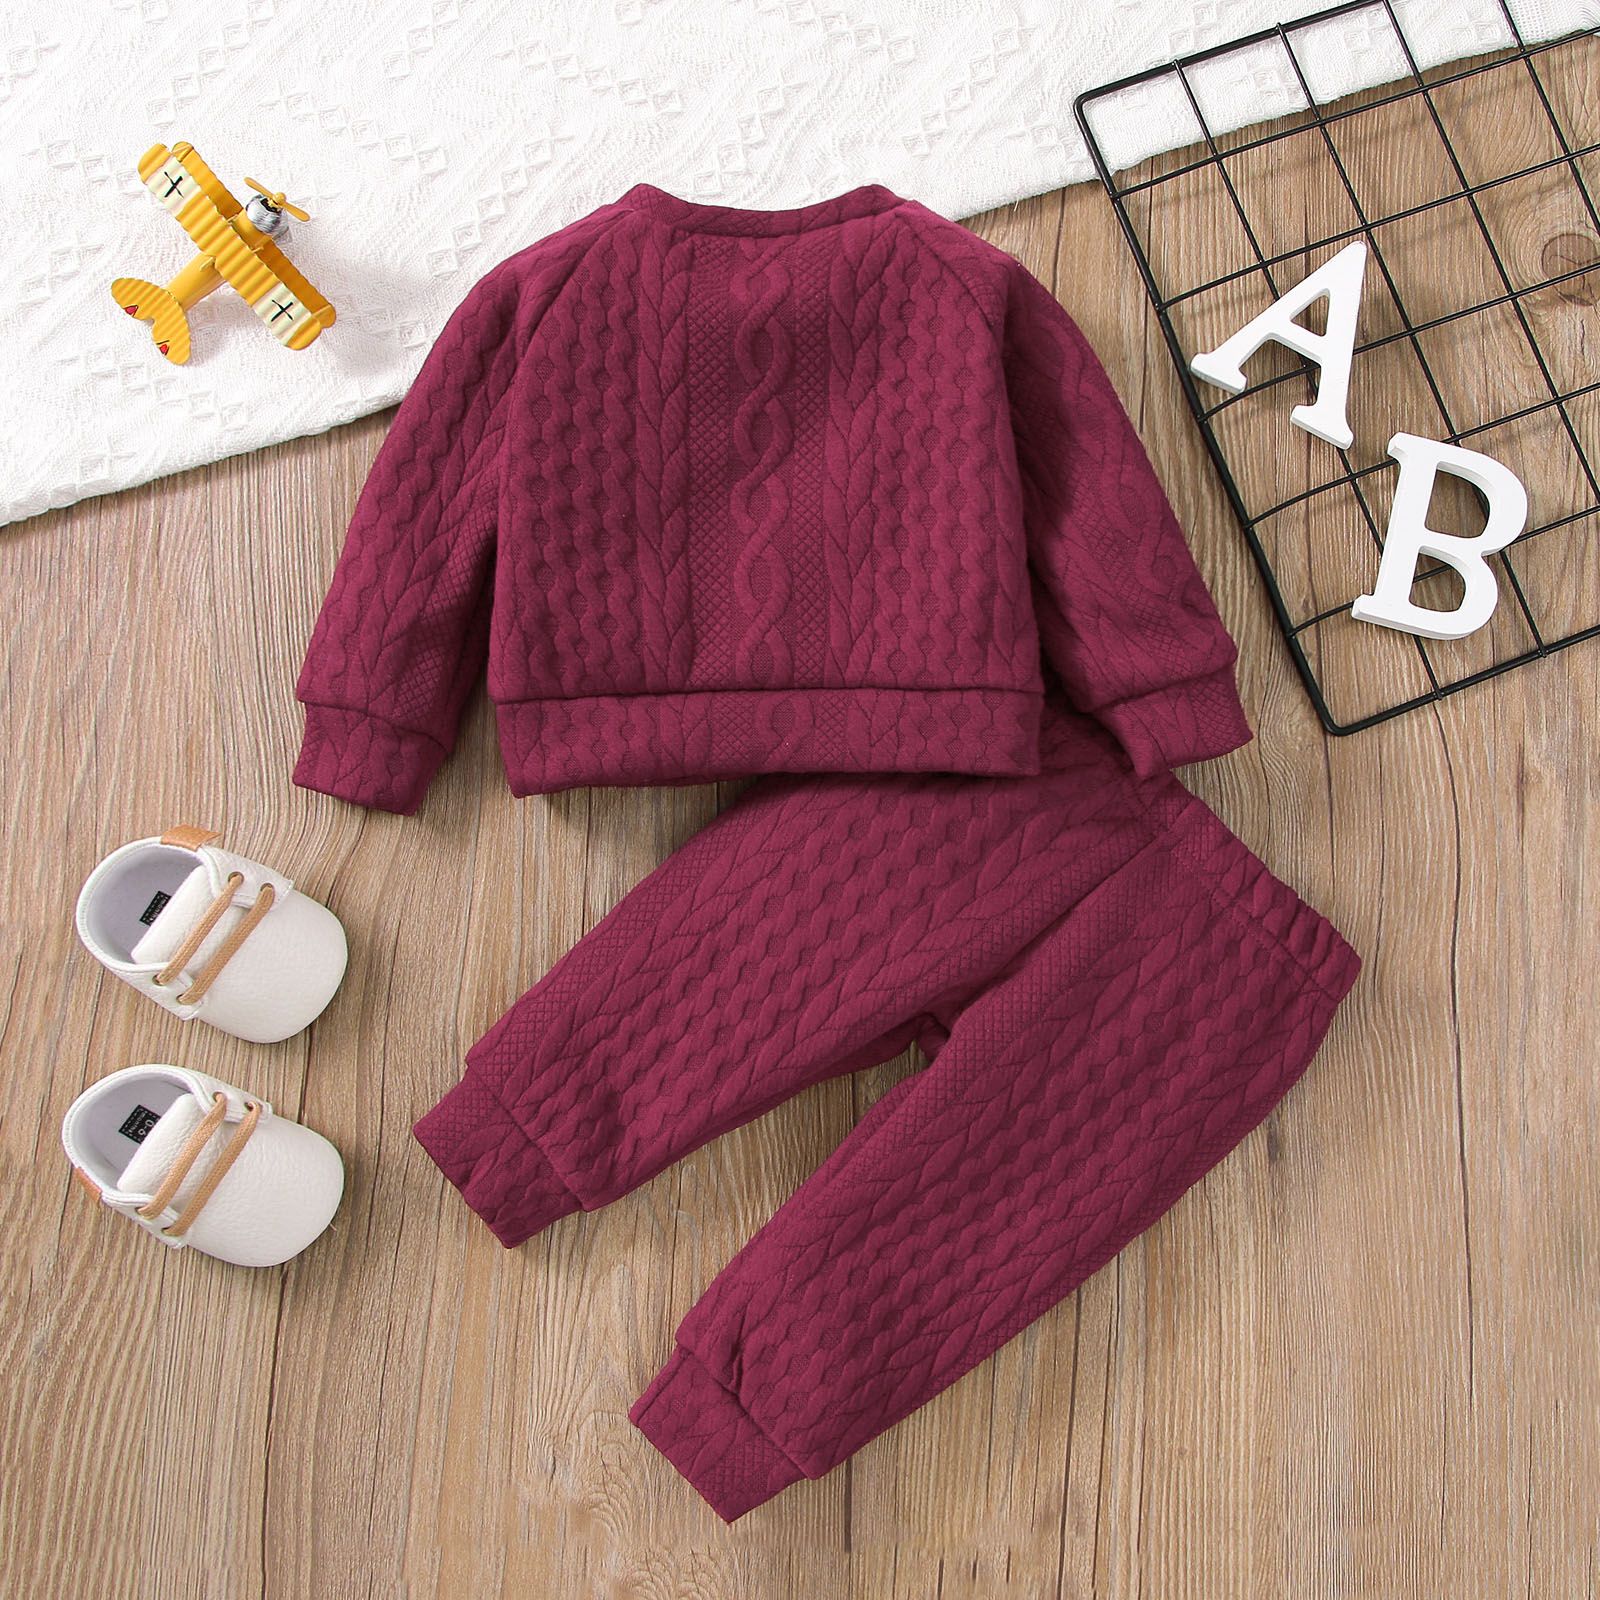 2pcs Baby Boy/Girl Solid Long-sleeve Imitation Knitting Set